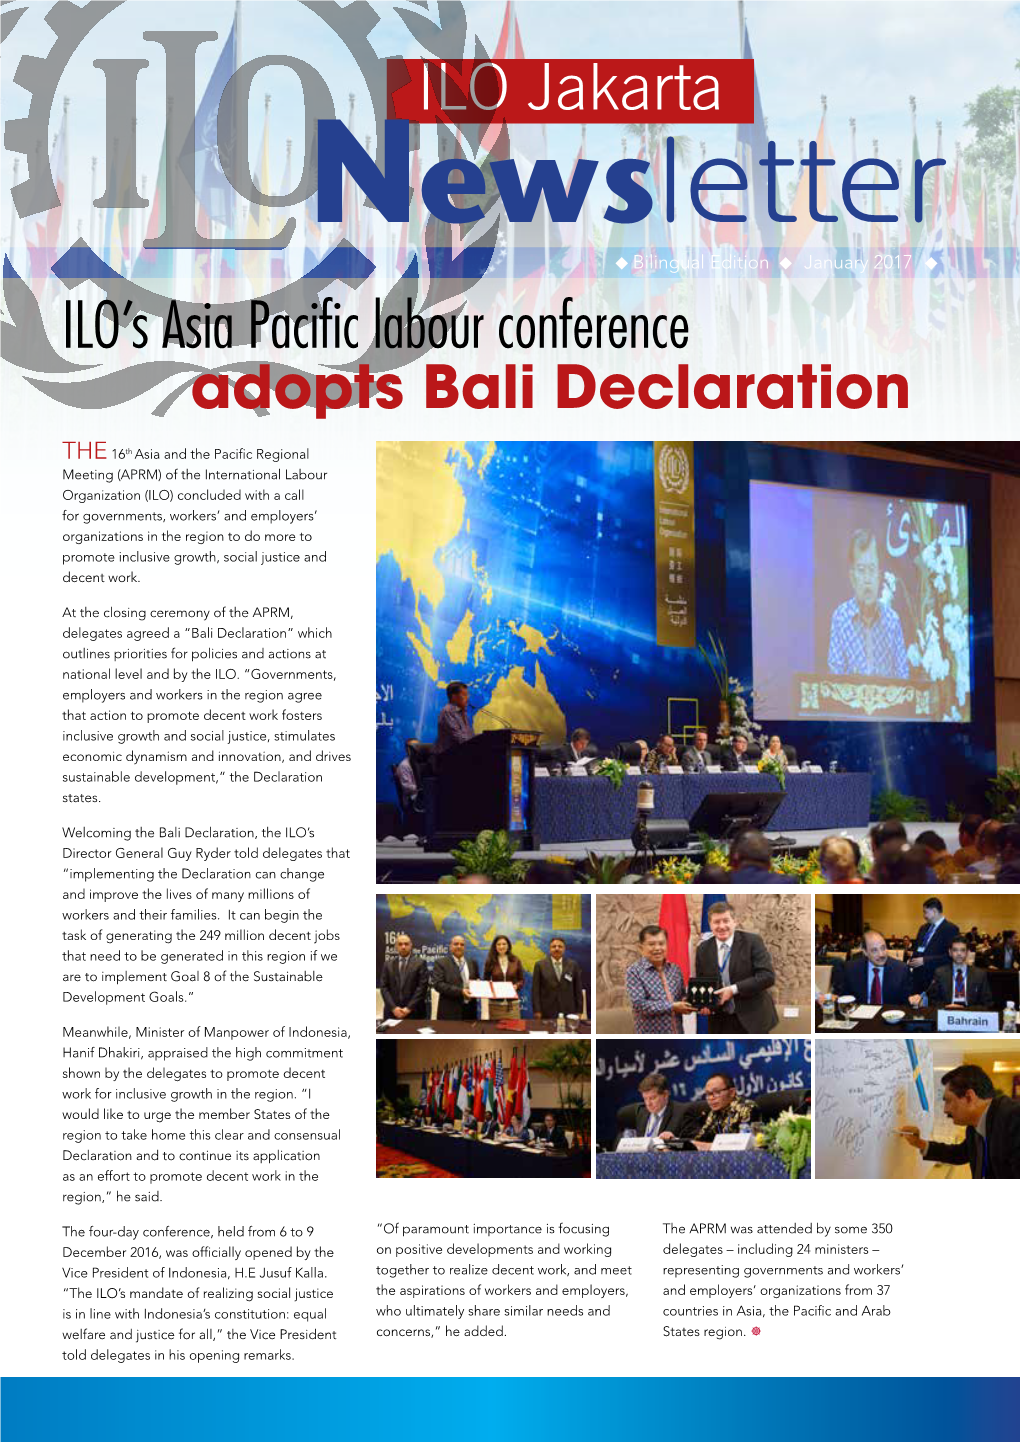 ILO Jakarta Newsletter Bilingual Edition January 2017 ILO’S Asia Pacific Labour Conference Adopts Bali Declaration